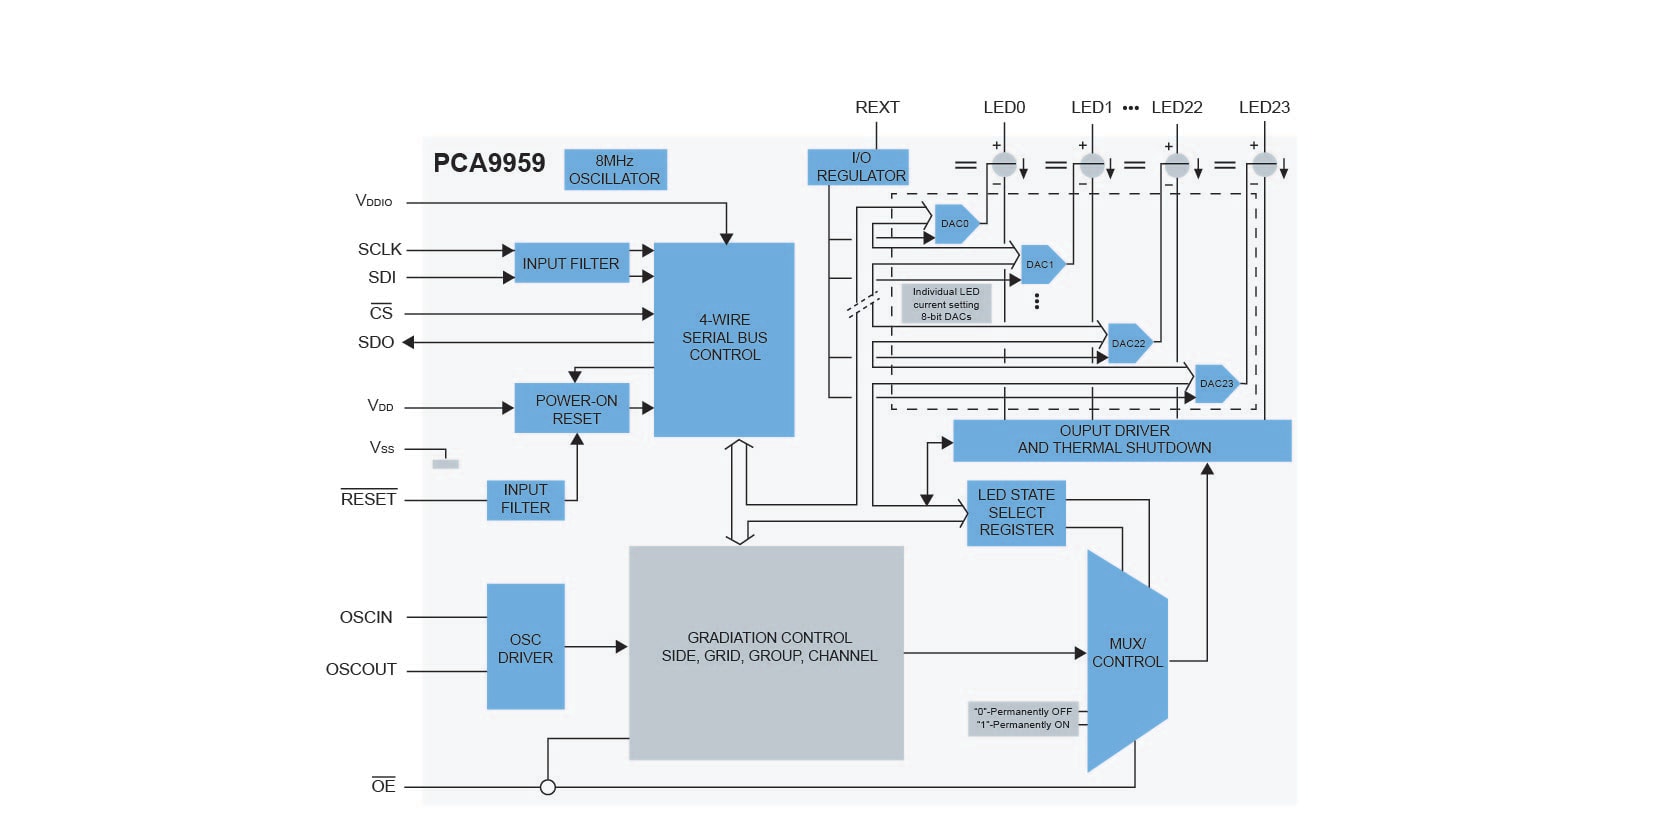 PCA9959 Applications Block Diagram